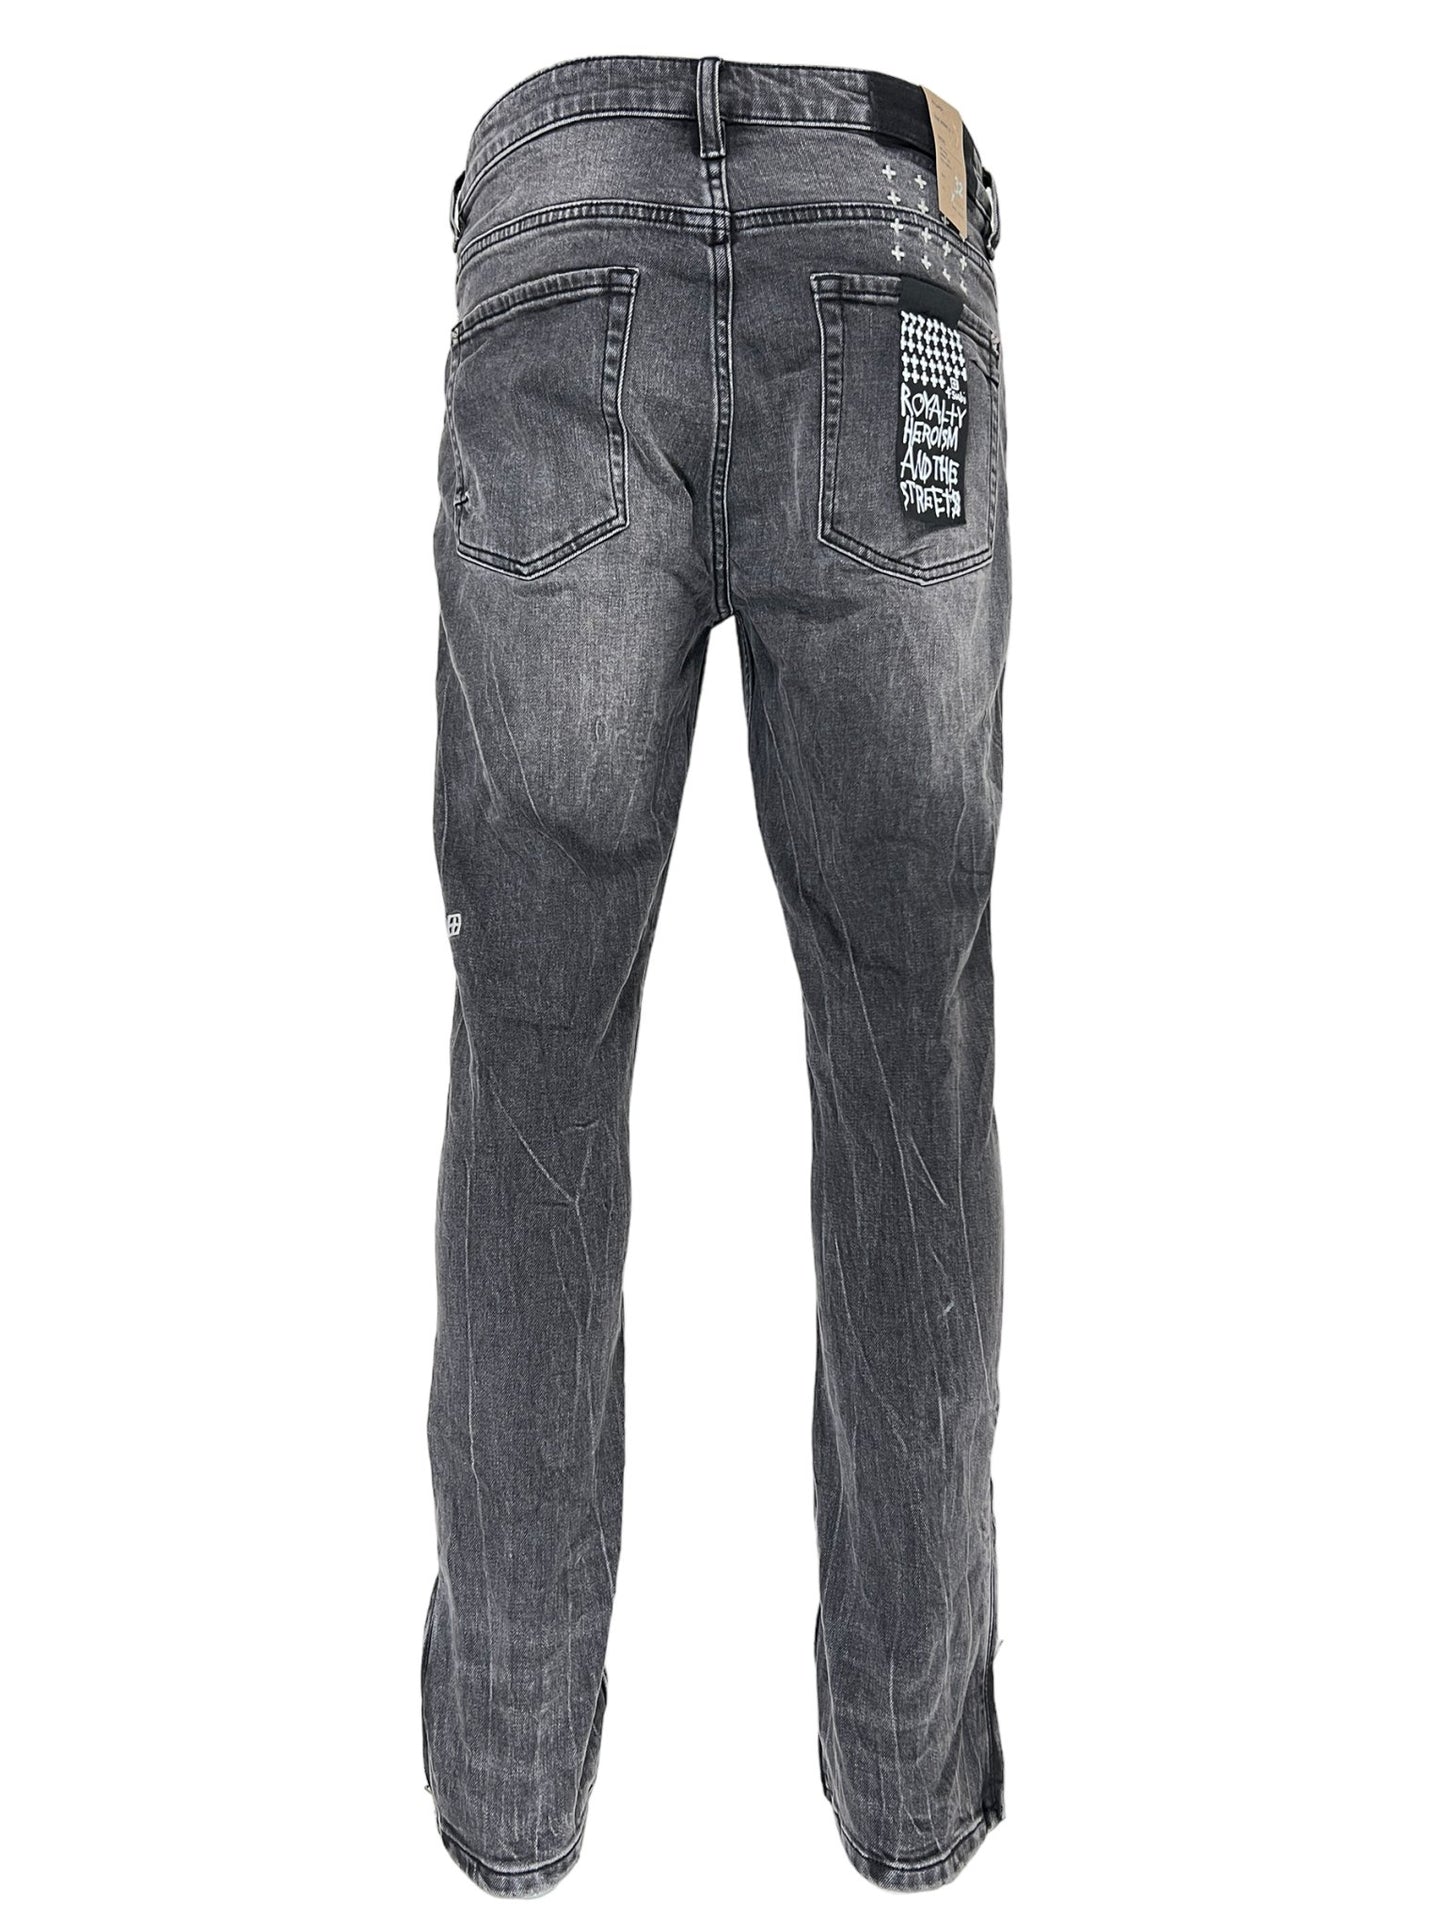 The back view of a pair of KSUBI VAN WINKLE CHAMBER BLACK skinny jeans.